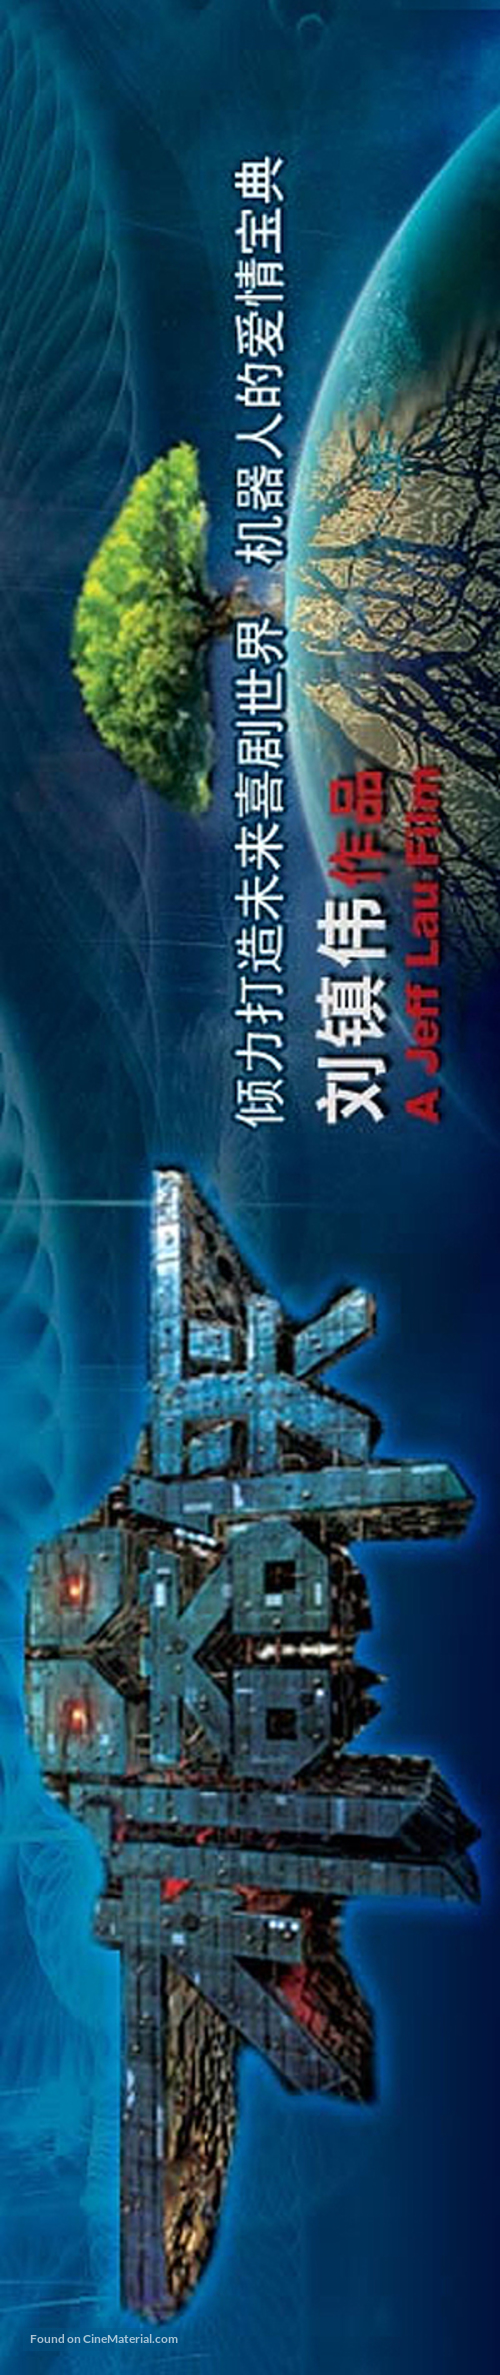 Metallic Attraction: Kungfu Cyborg - Chinese poster